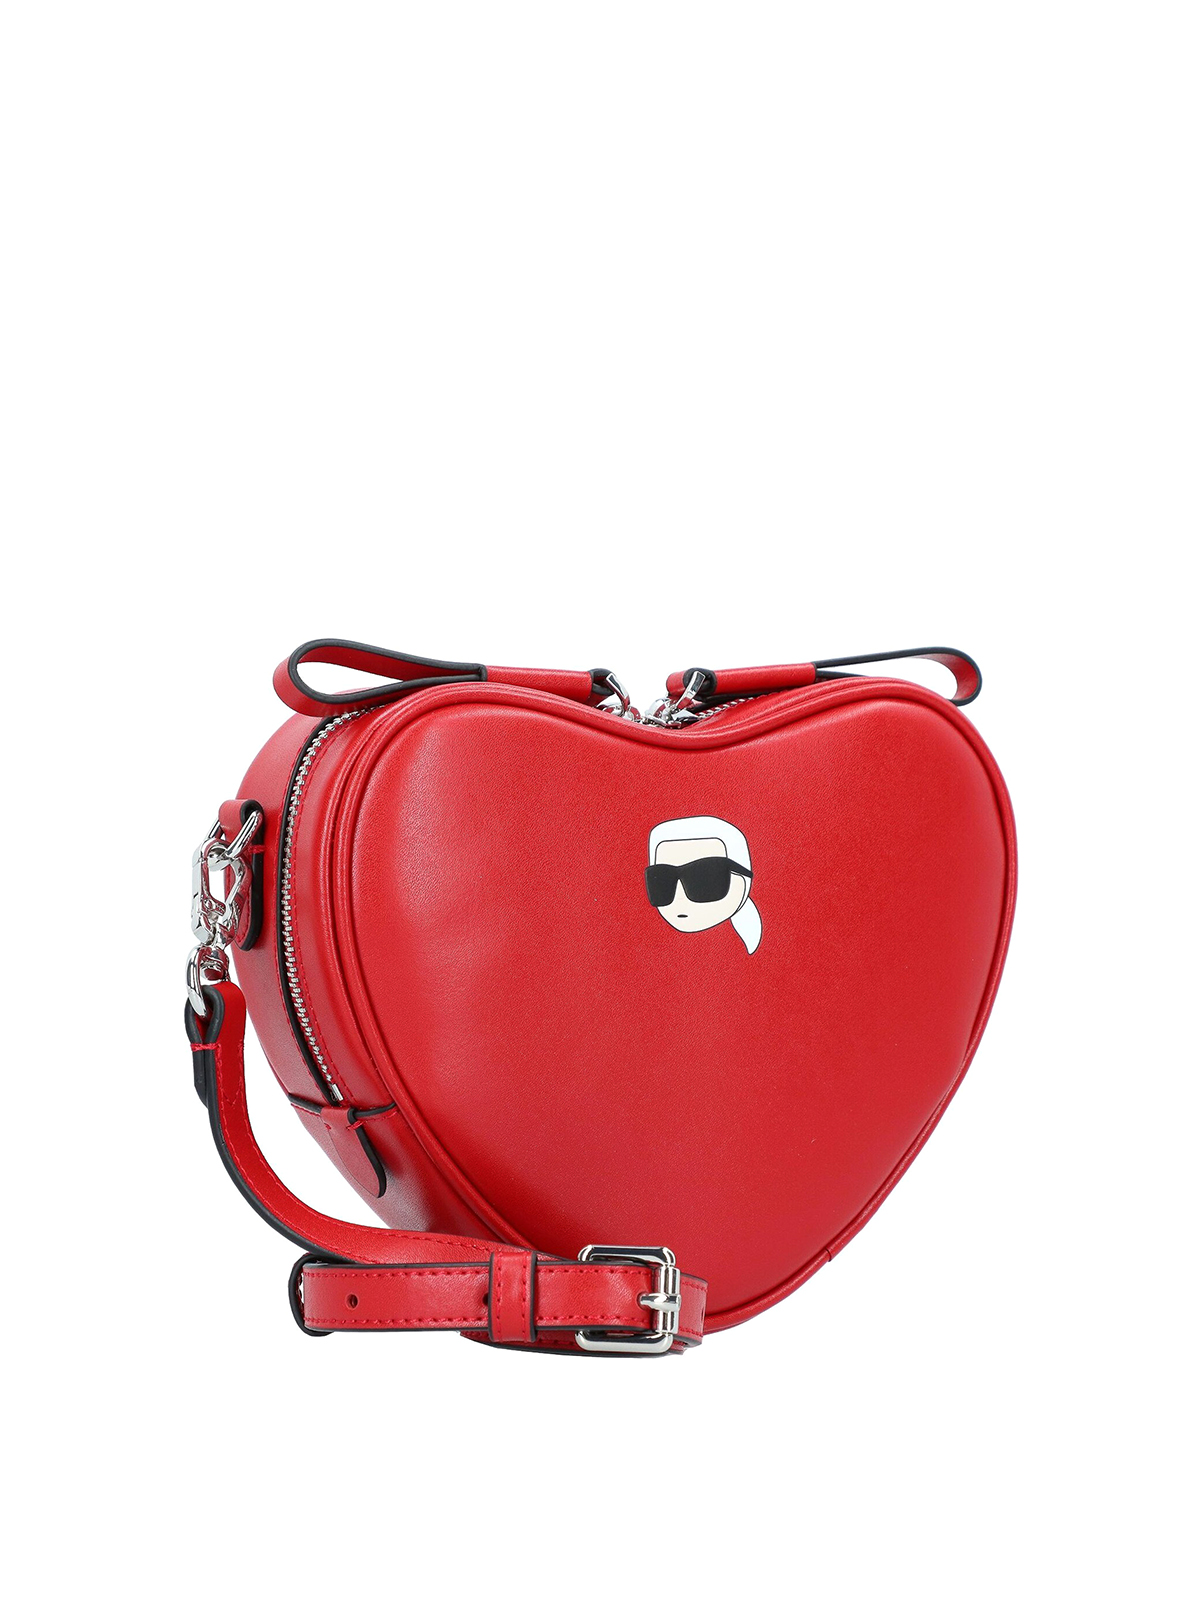 Vivienne Westwood Women's Victoria New Heart Cross Body Bag